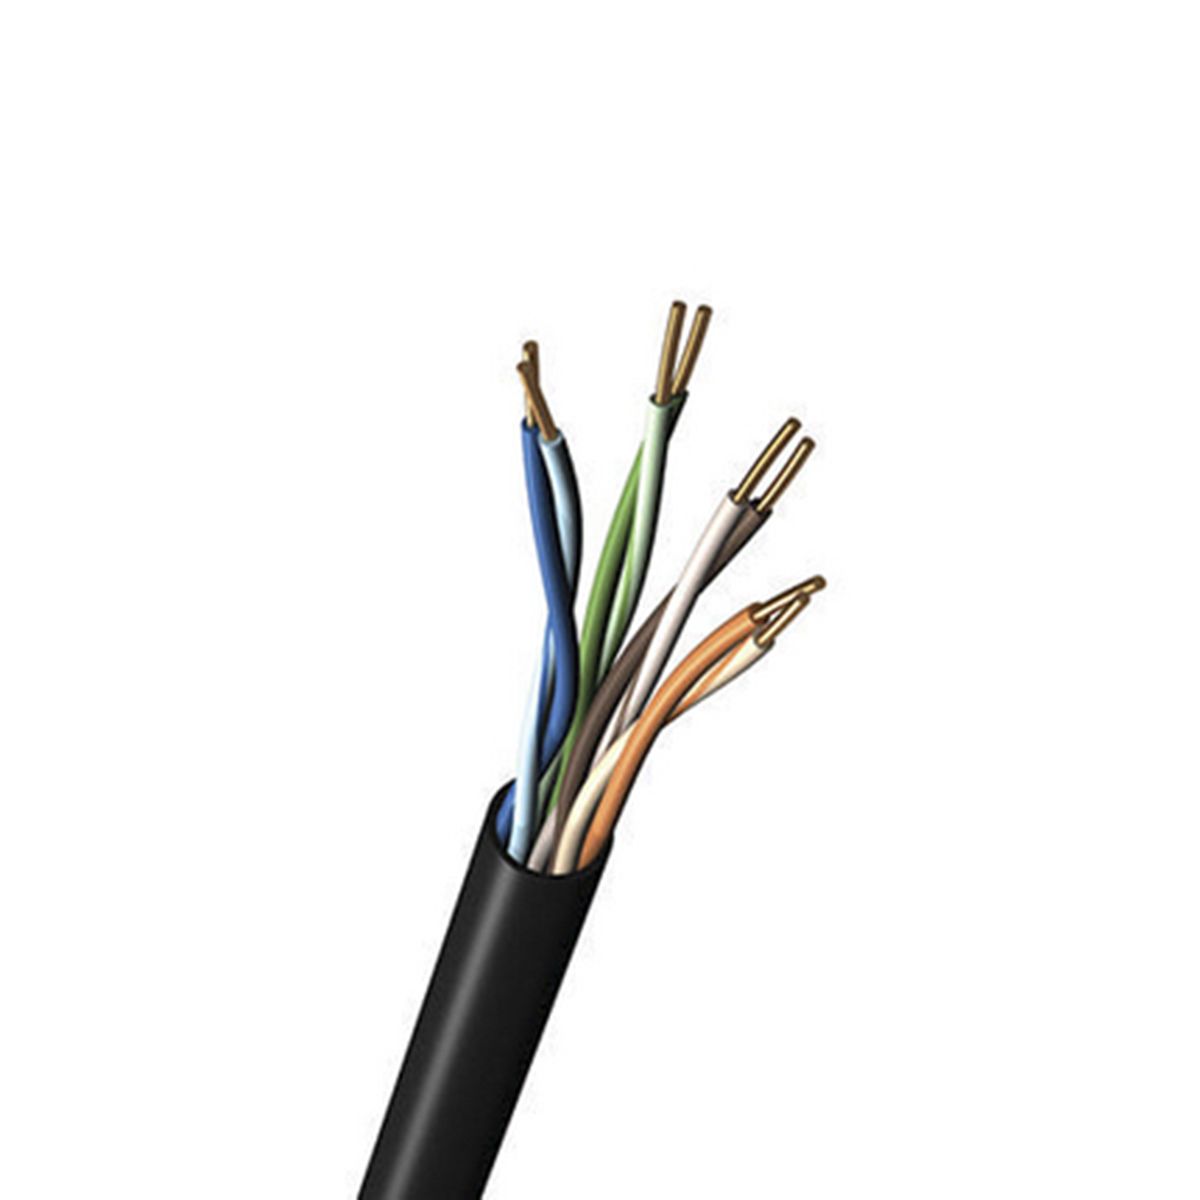 Belden DataTuff Ethernetkabel Cat.5e, 305m, Schwarz Verlegekabel U/UTP, Aussen ø 5.84mm, PVC